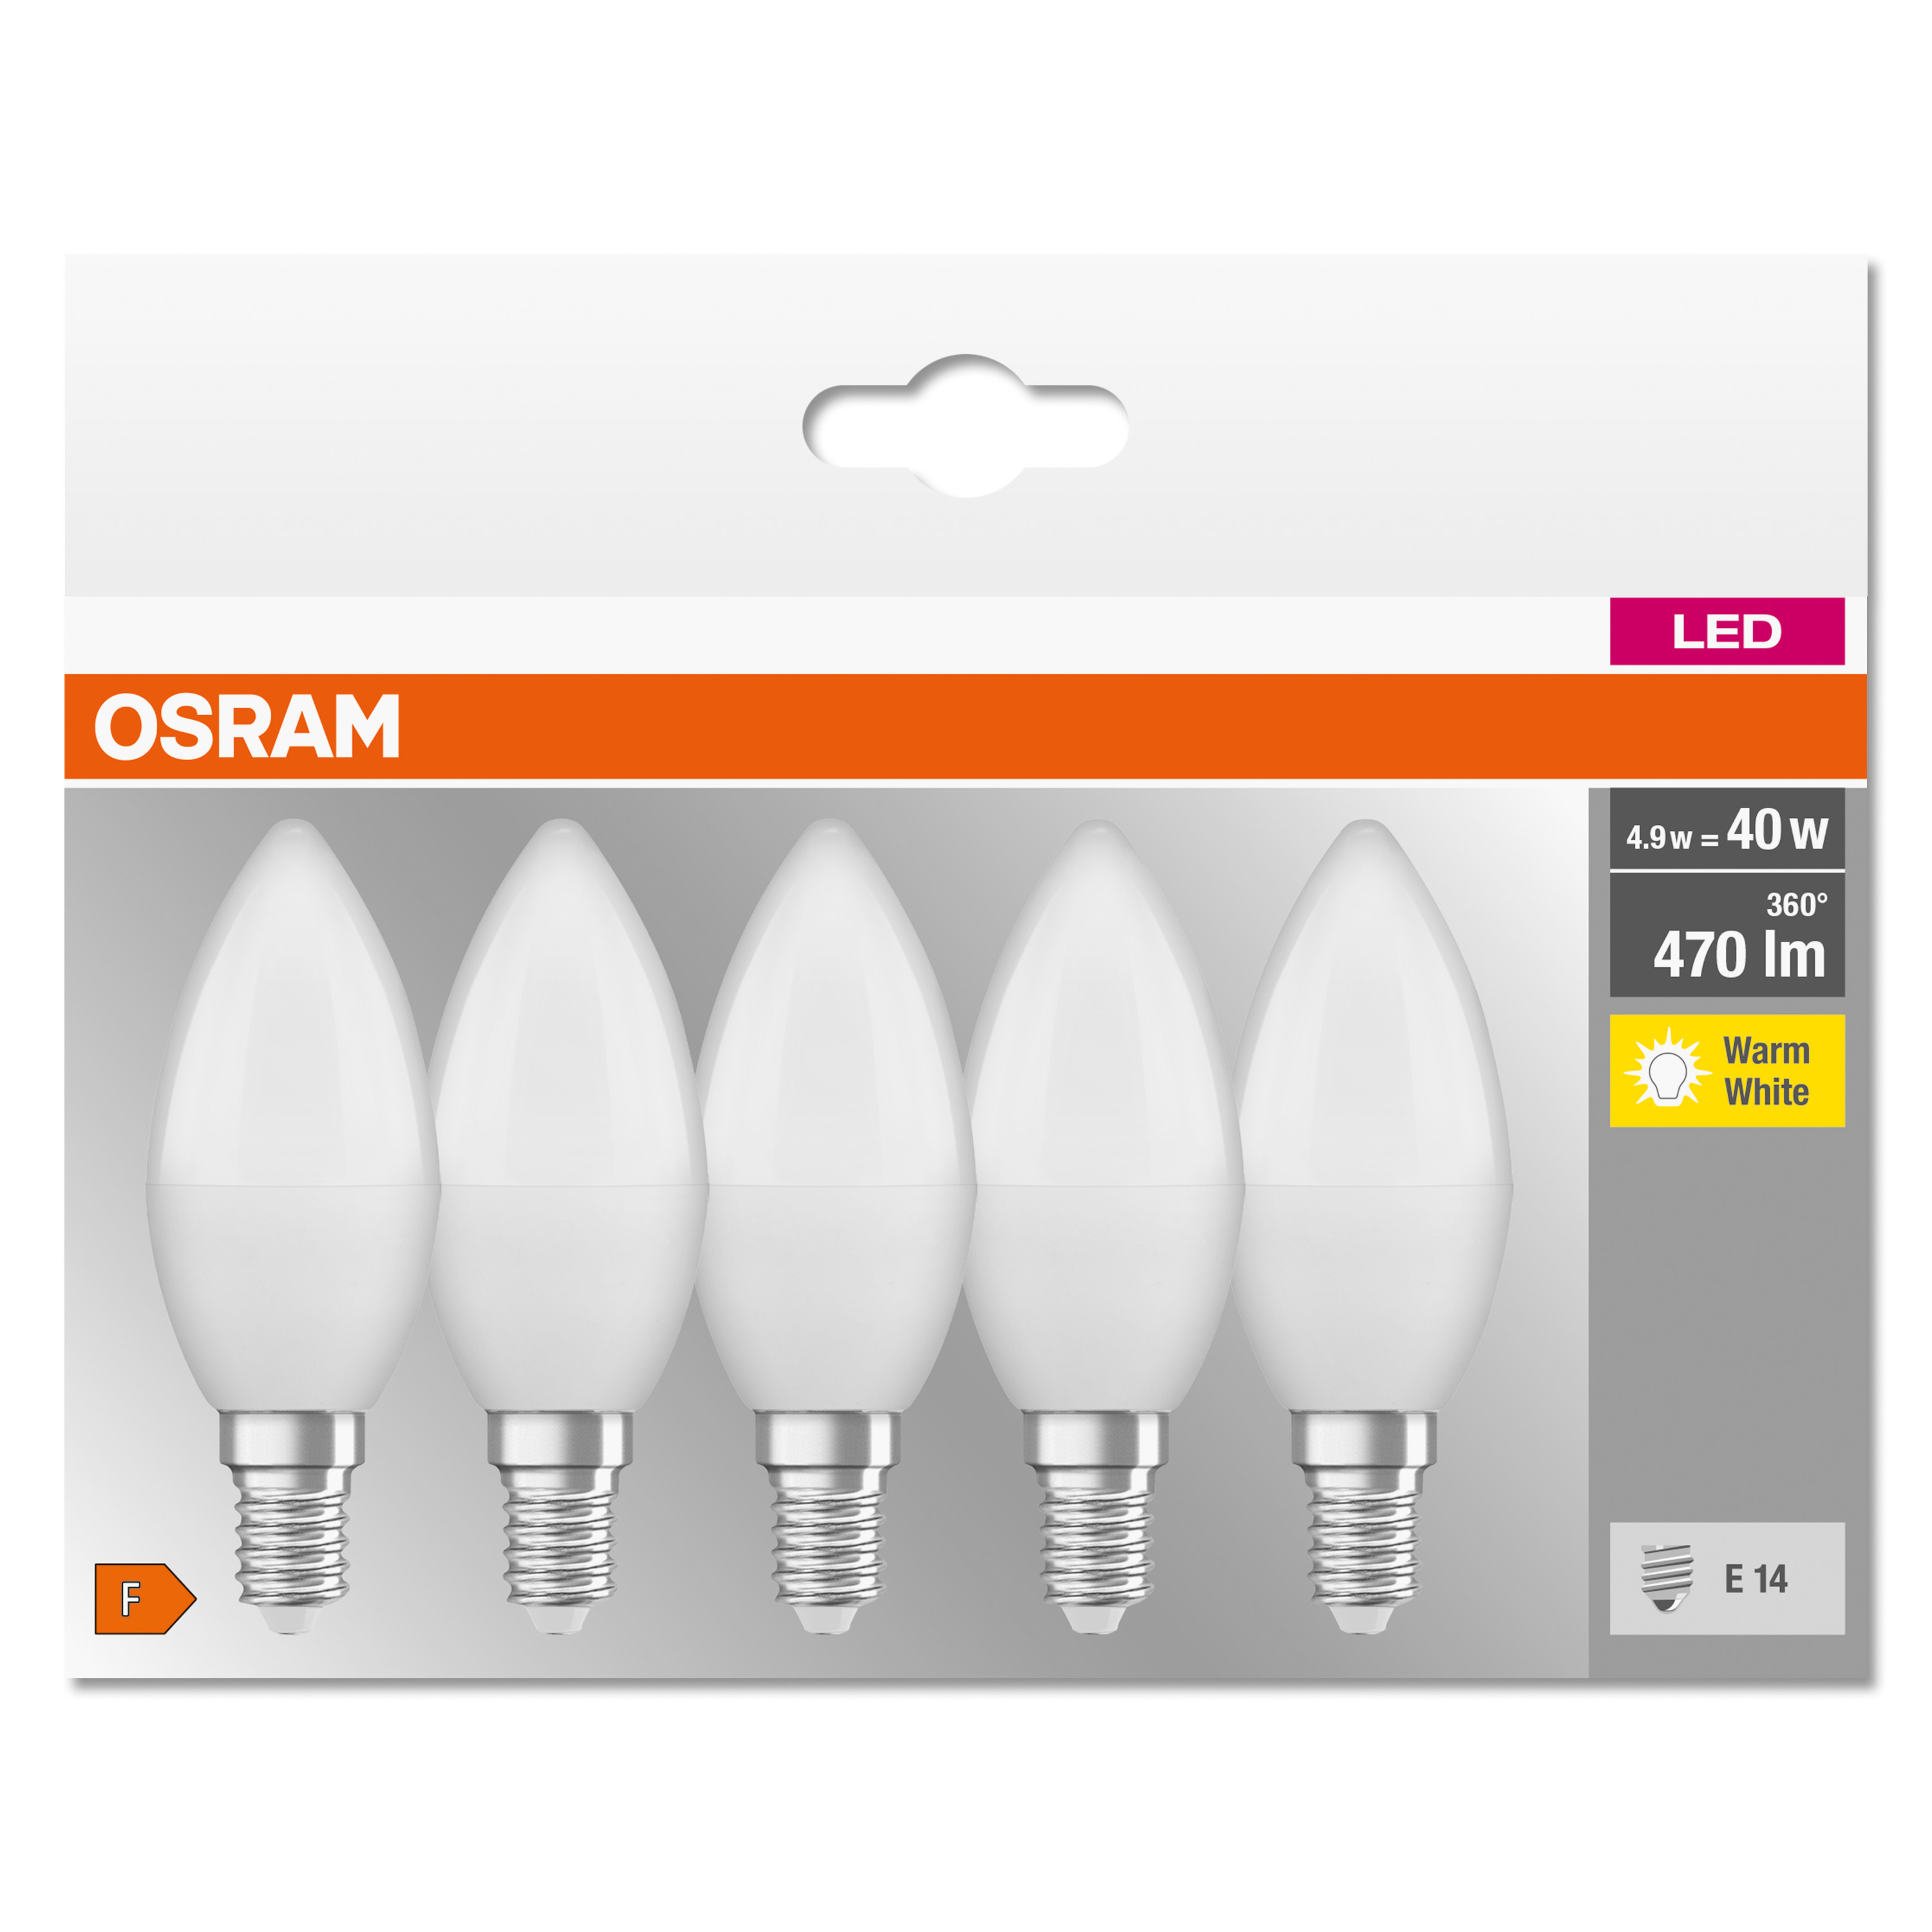 BASE lumen LED B CLASSIC OSRAM  Lampe 470 Warmweiß LED